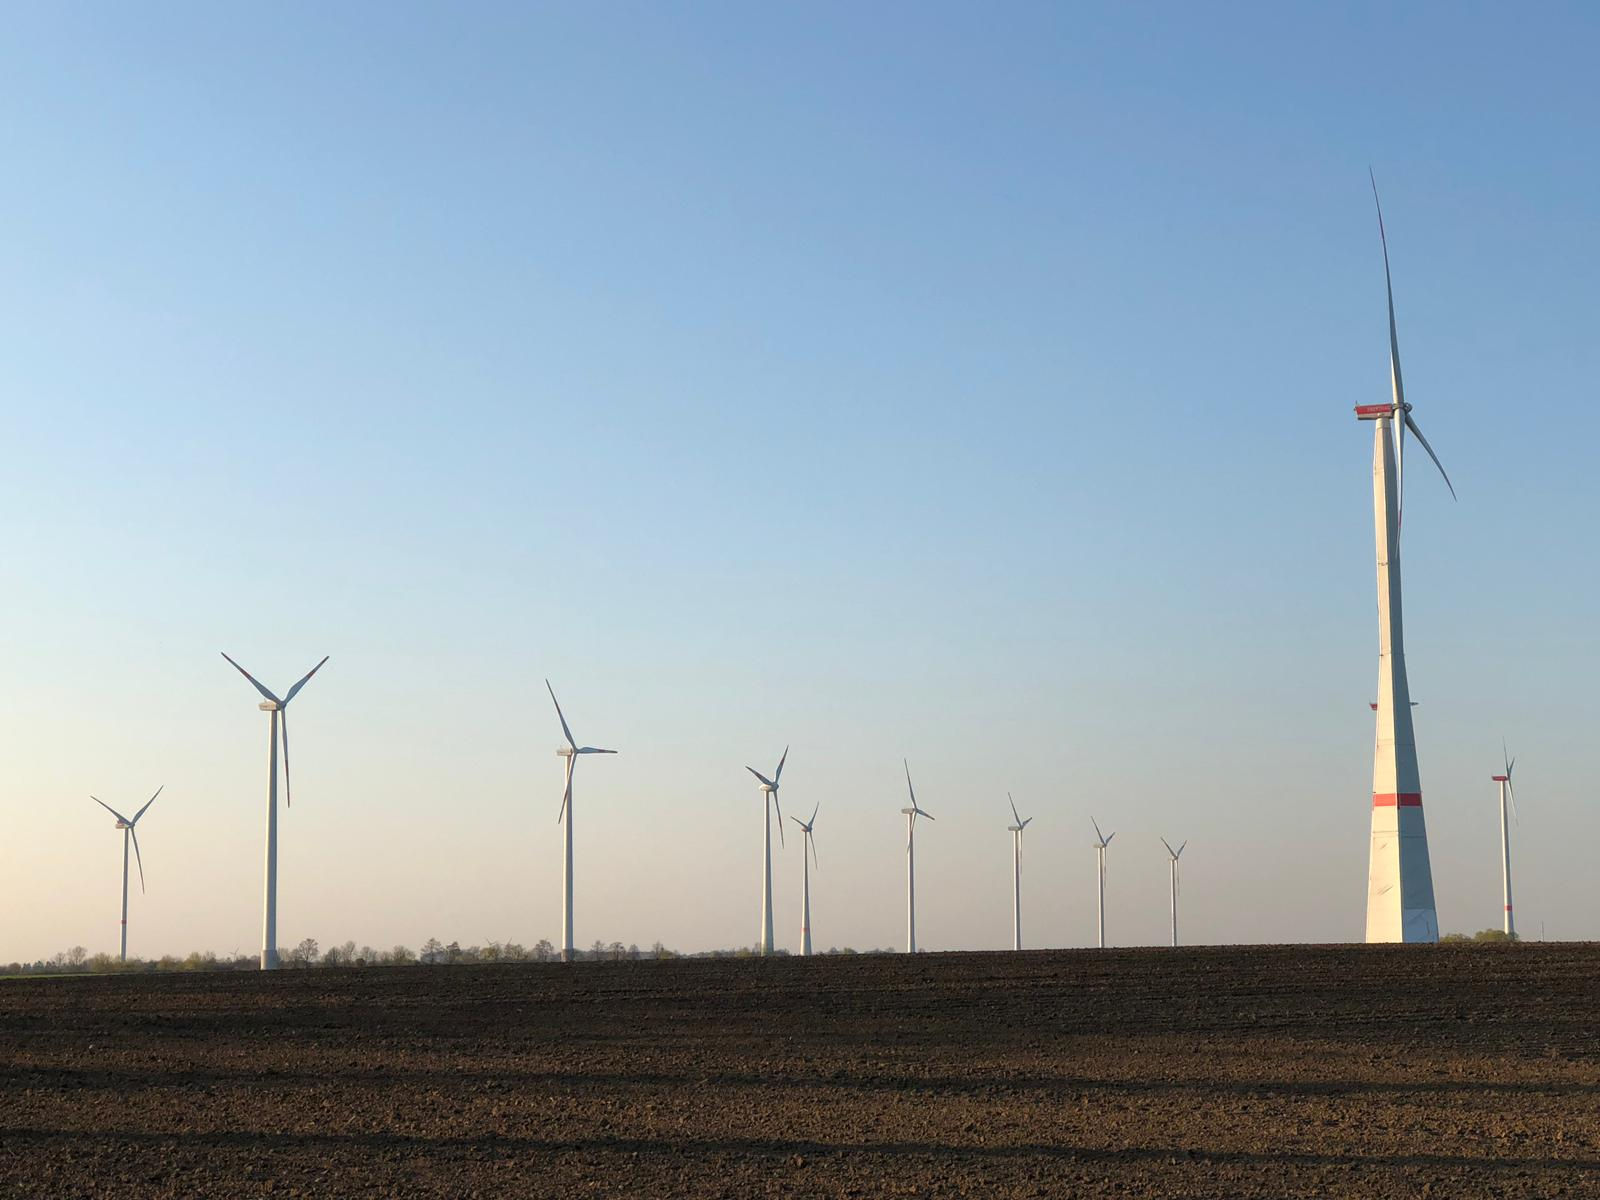 “Windenergie: Grünen-Kritik entzweit grosse Koalition”